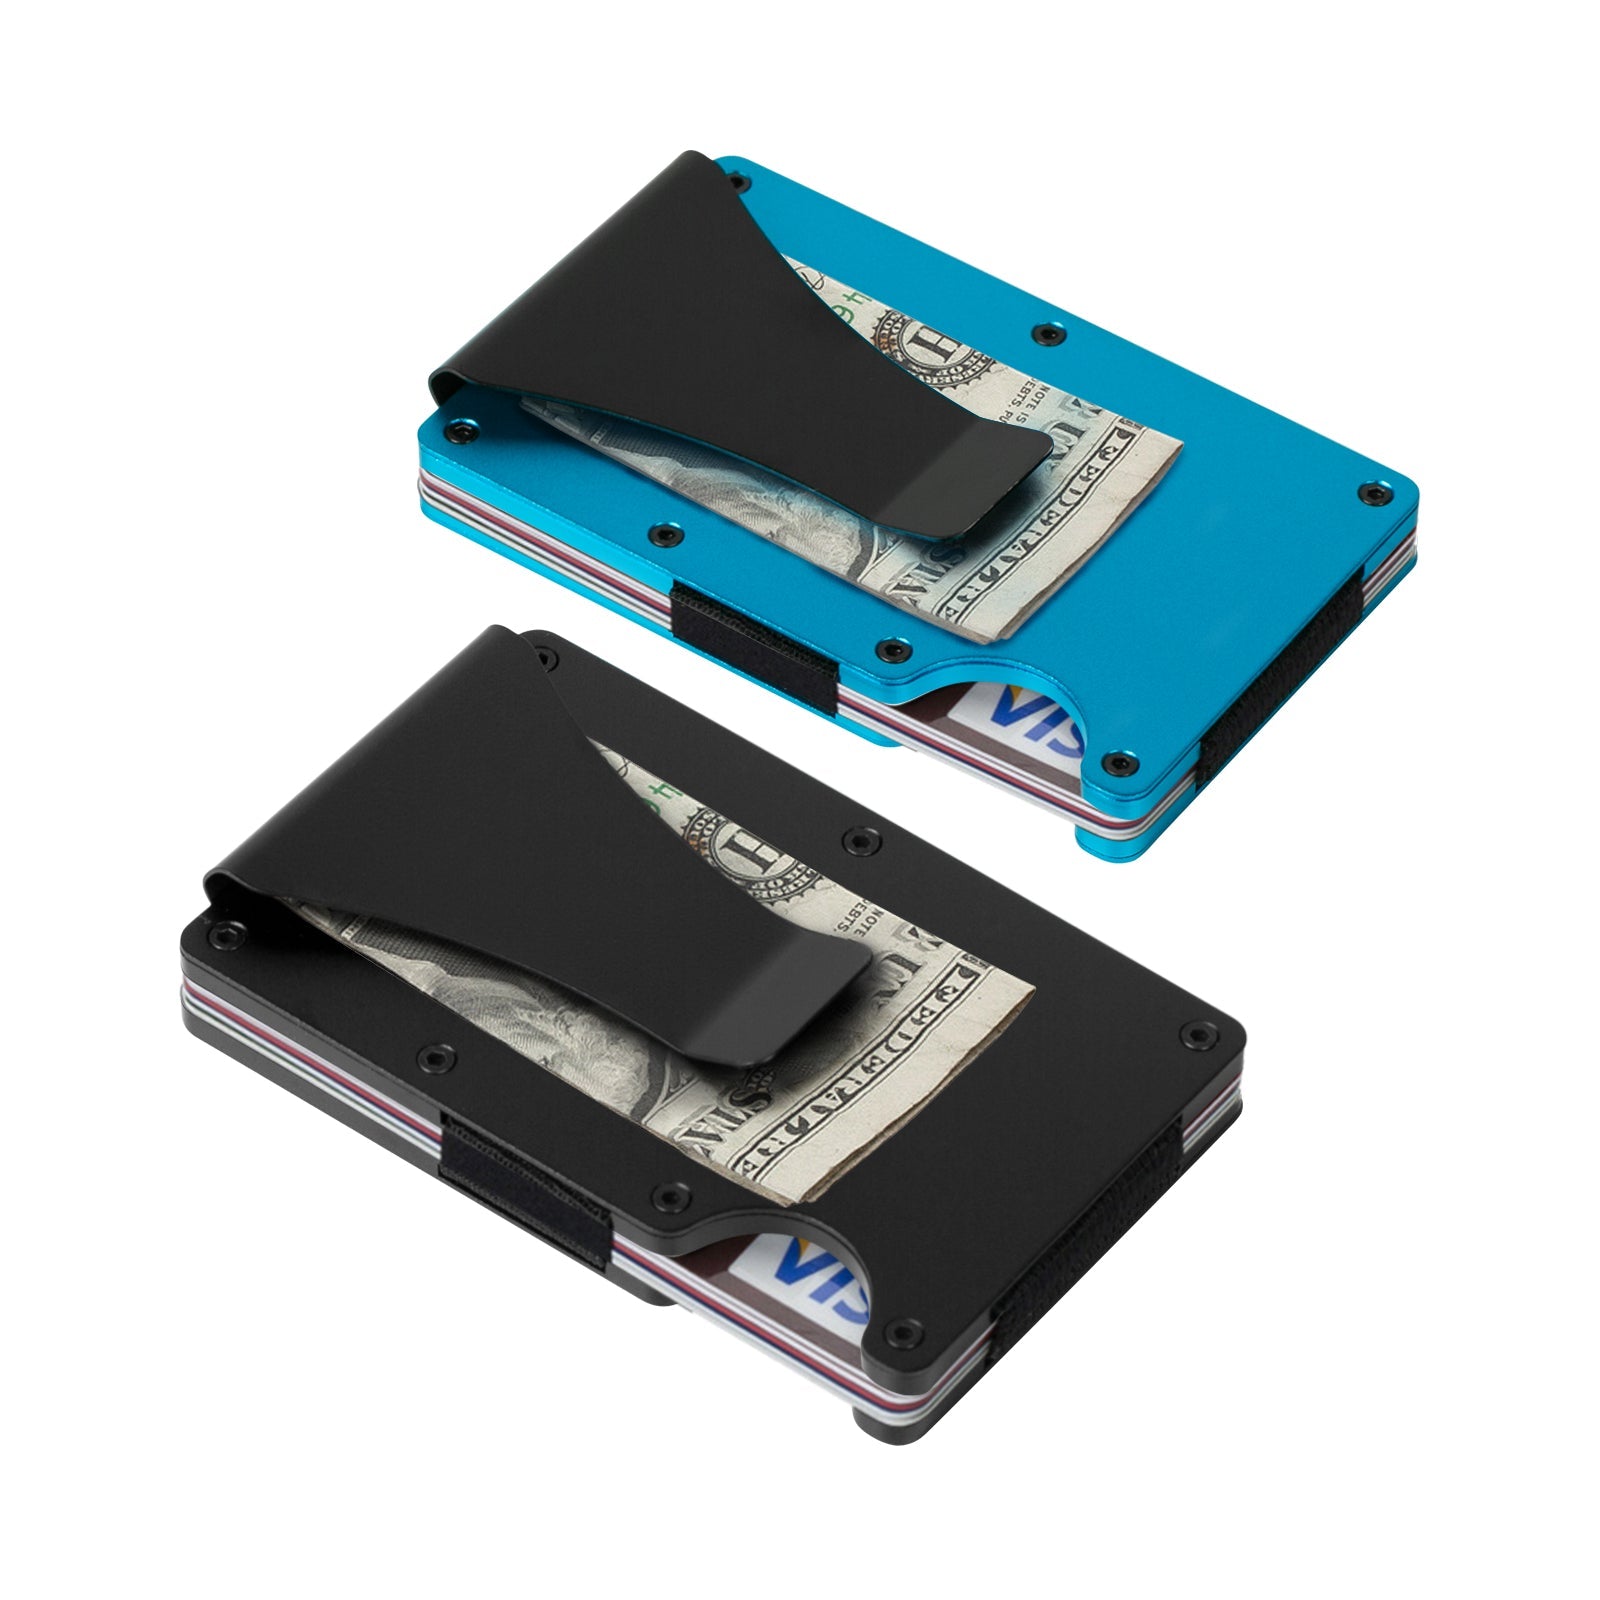 Jungler Rfid Blocking Minimalist Genuine Leather Money Clip Wallet Slim Front Pocket Wallet Credit Card Holder With Id Window 6 Card Holder